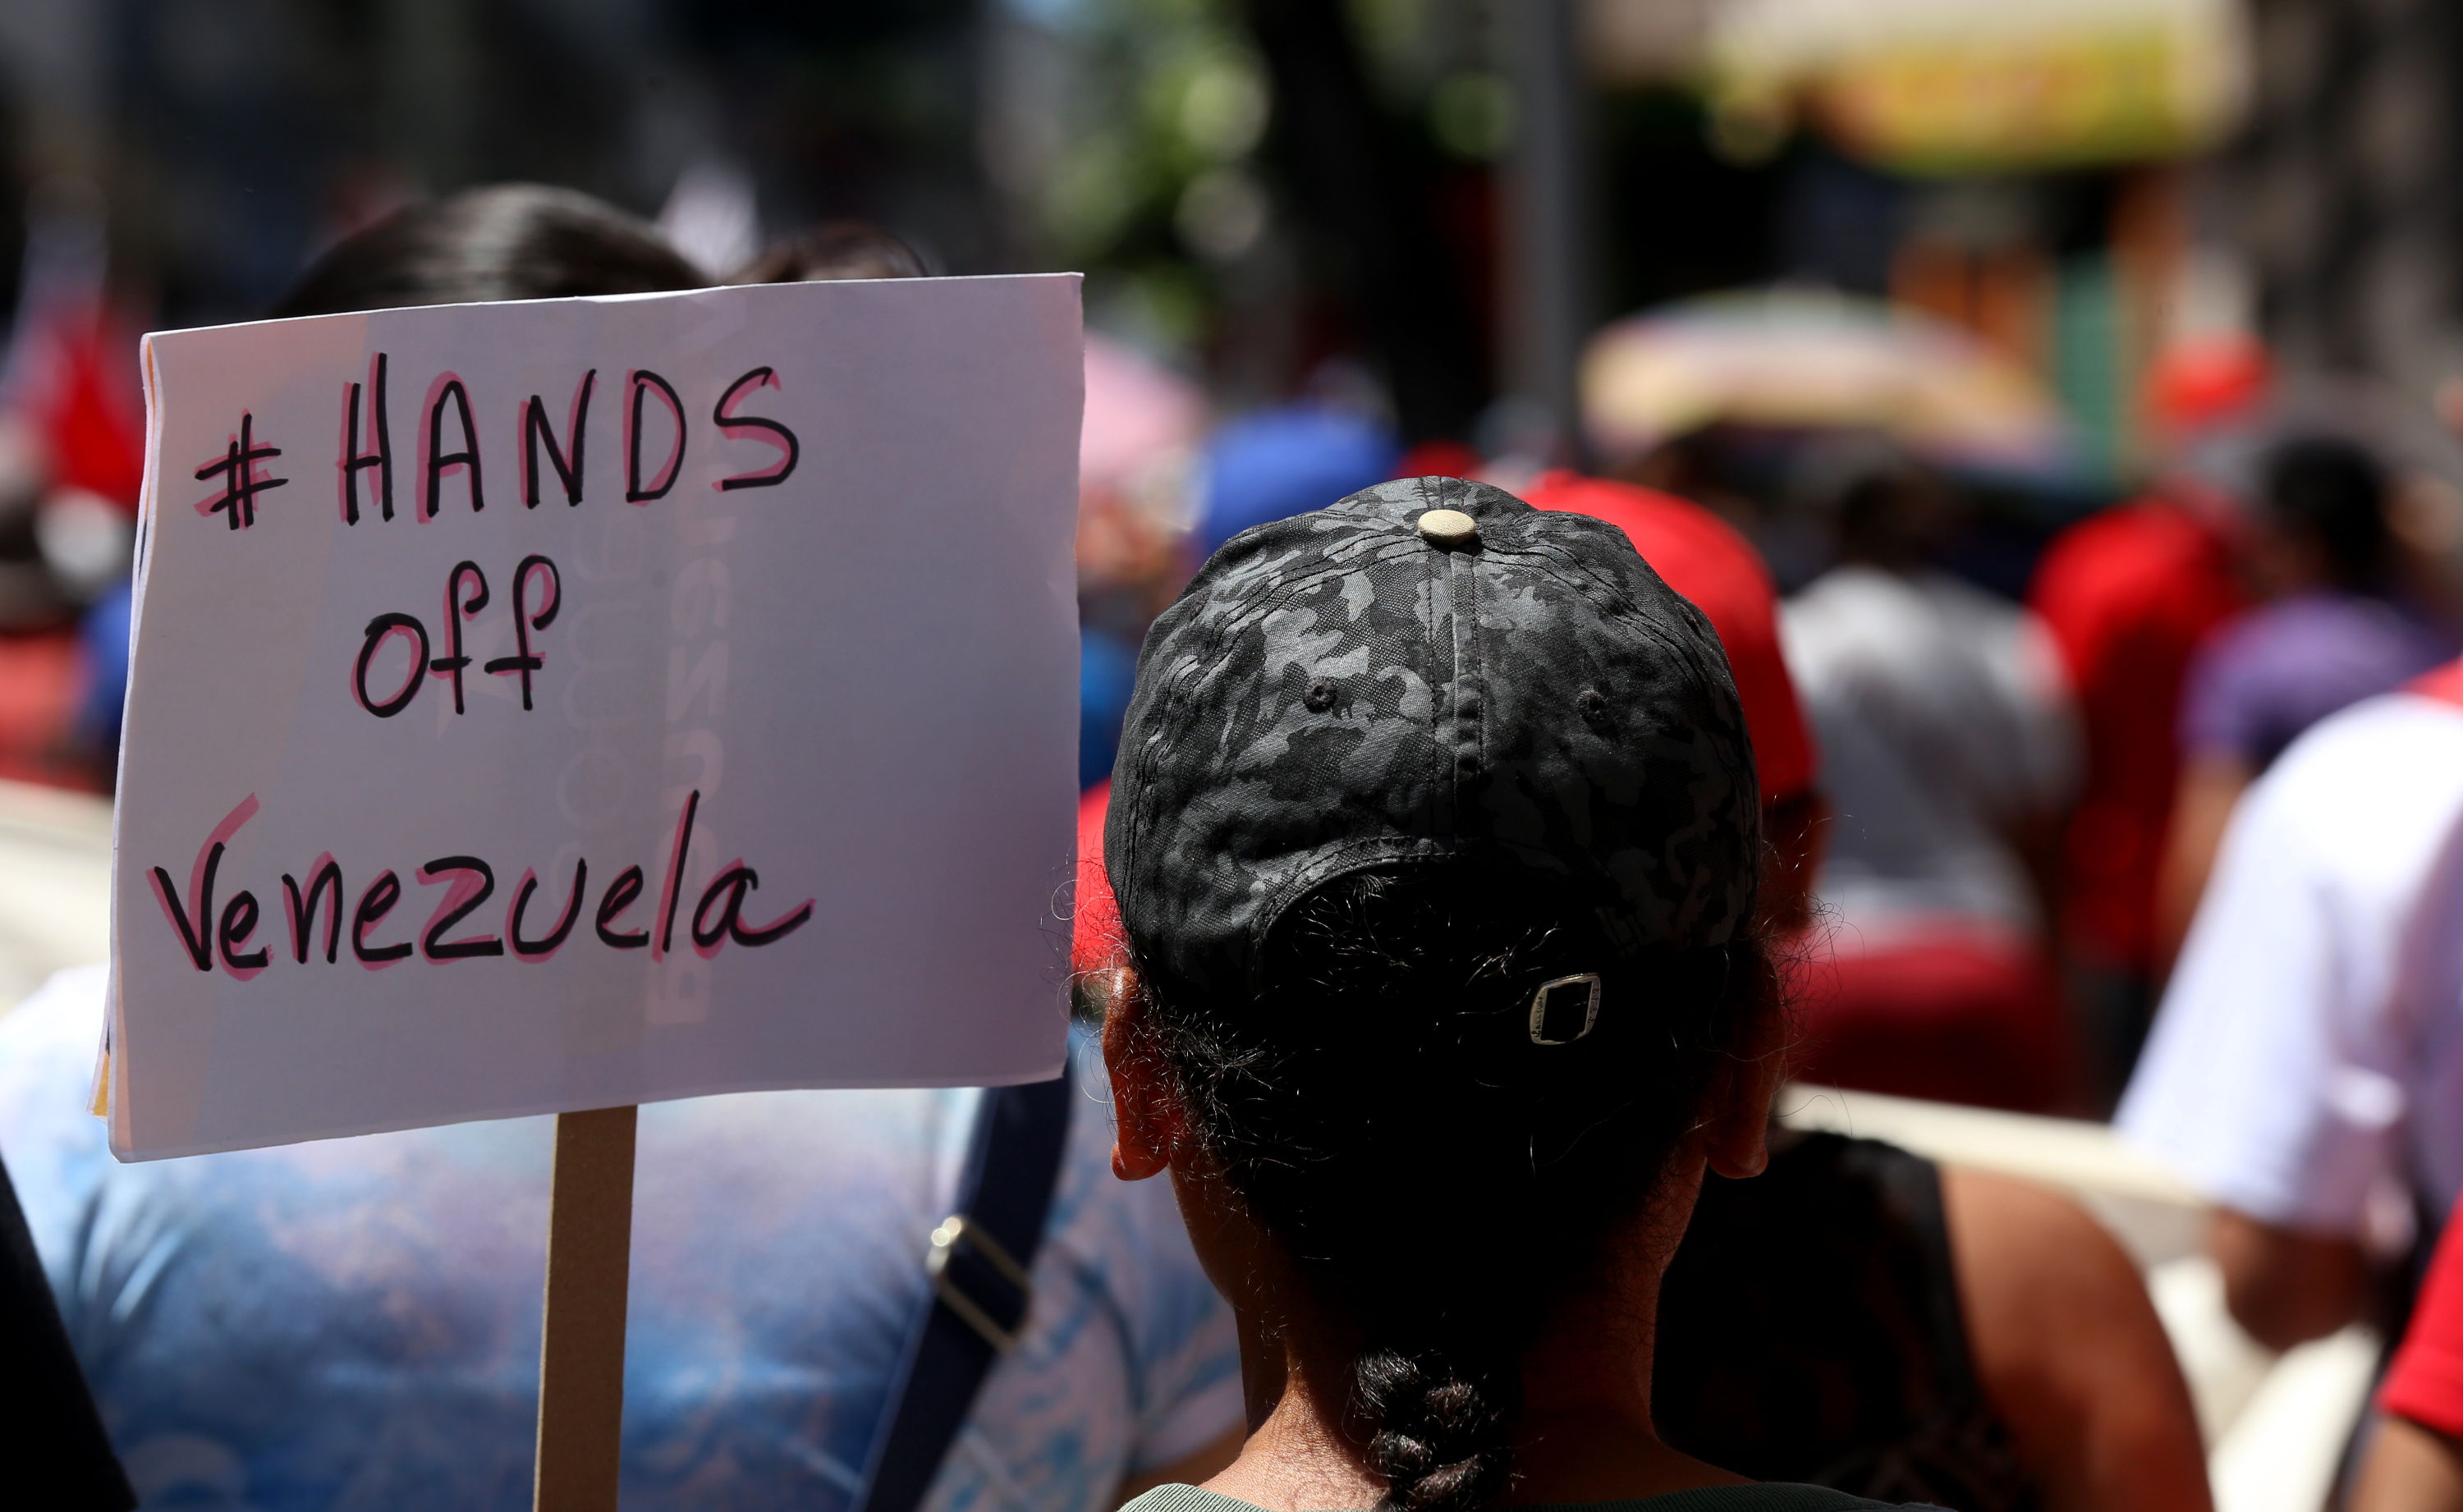 Maduro avala una asistencia técnica humanitaria neutral, sin injerencia ni intereses ocultos